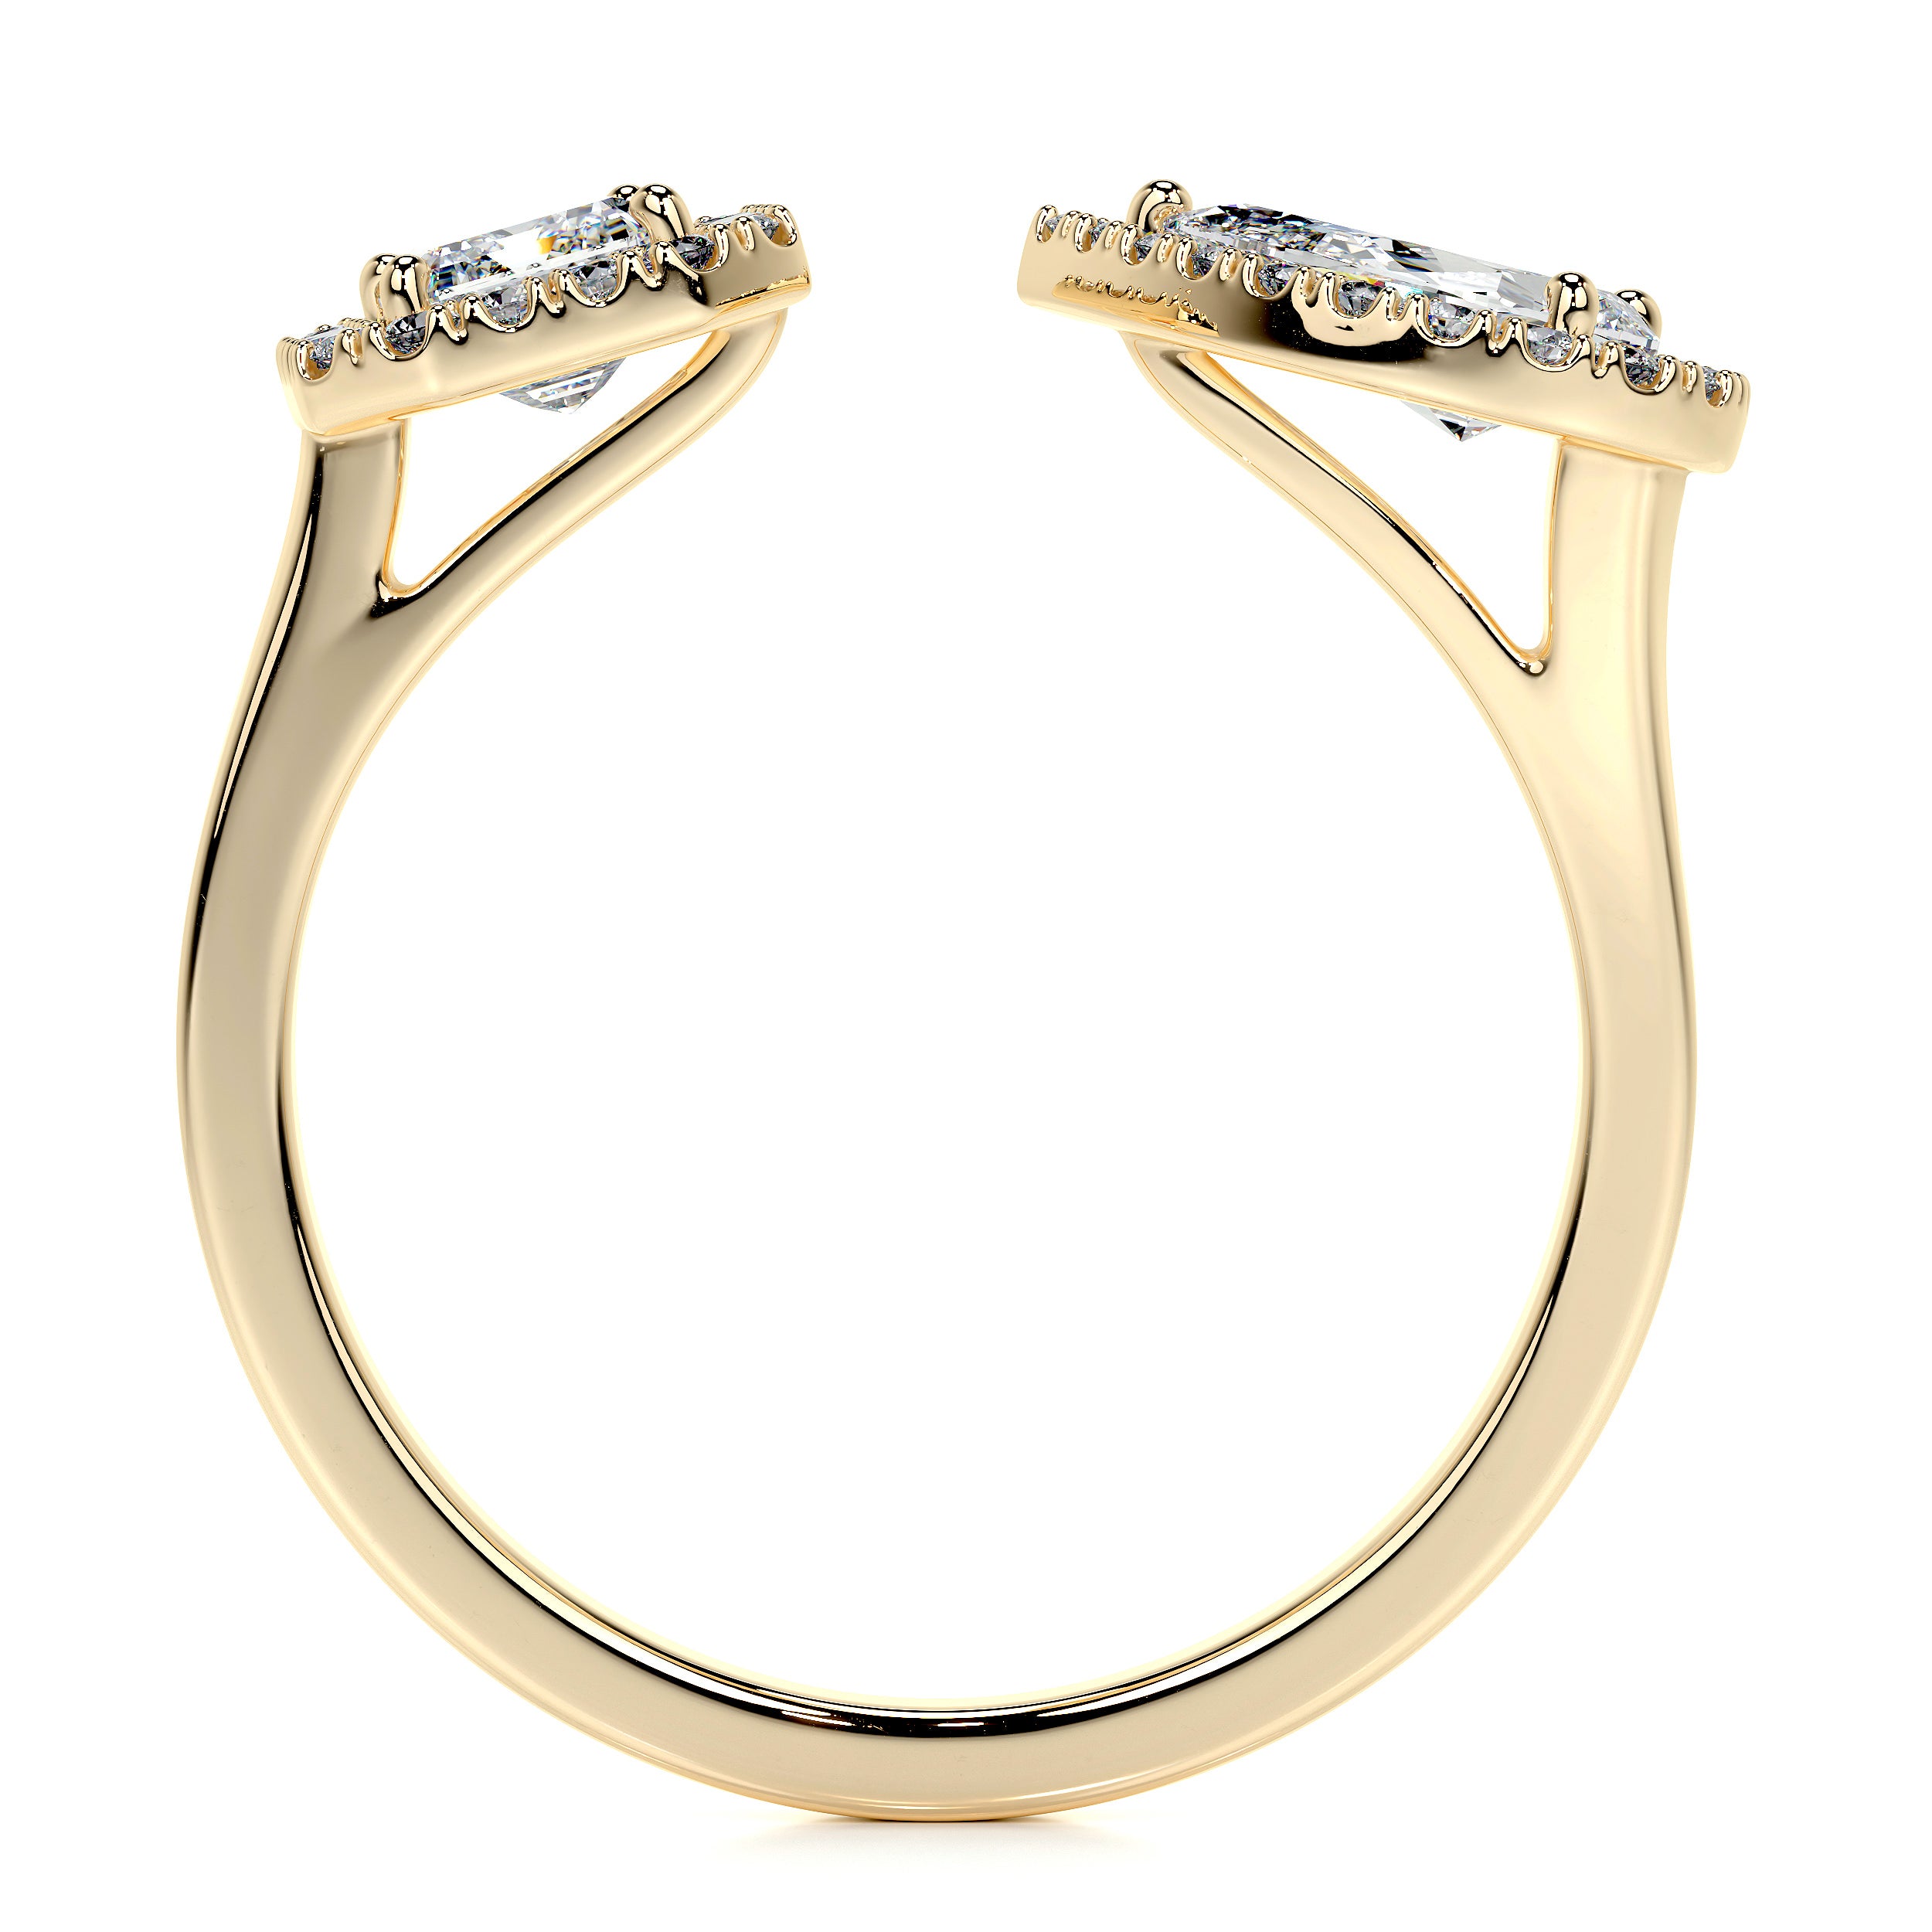 Edith Lab Grown Diamond Wedding Ring   (1.2 Carat) -18K Yellow Gold